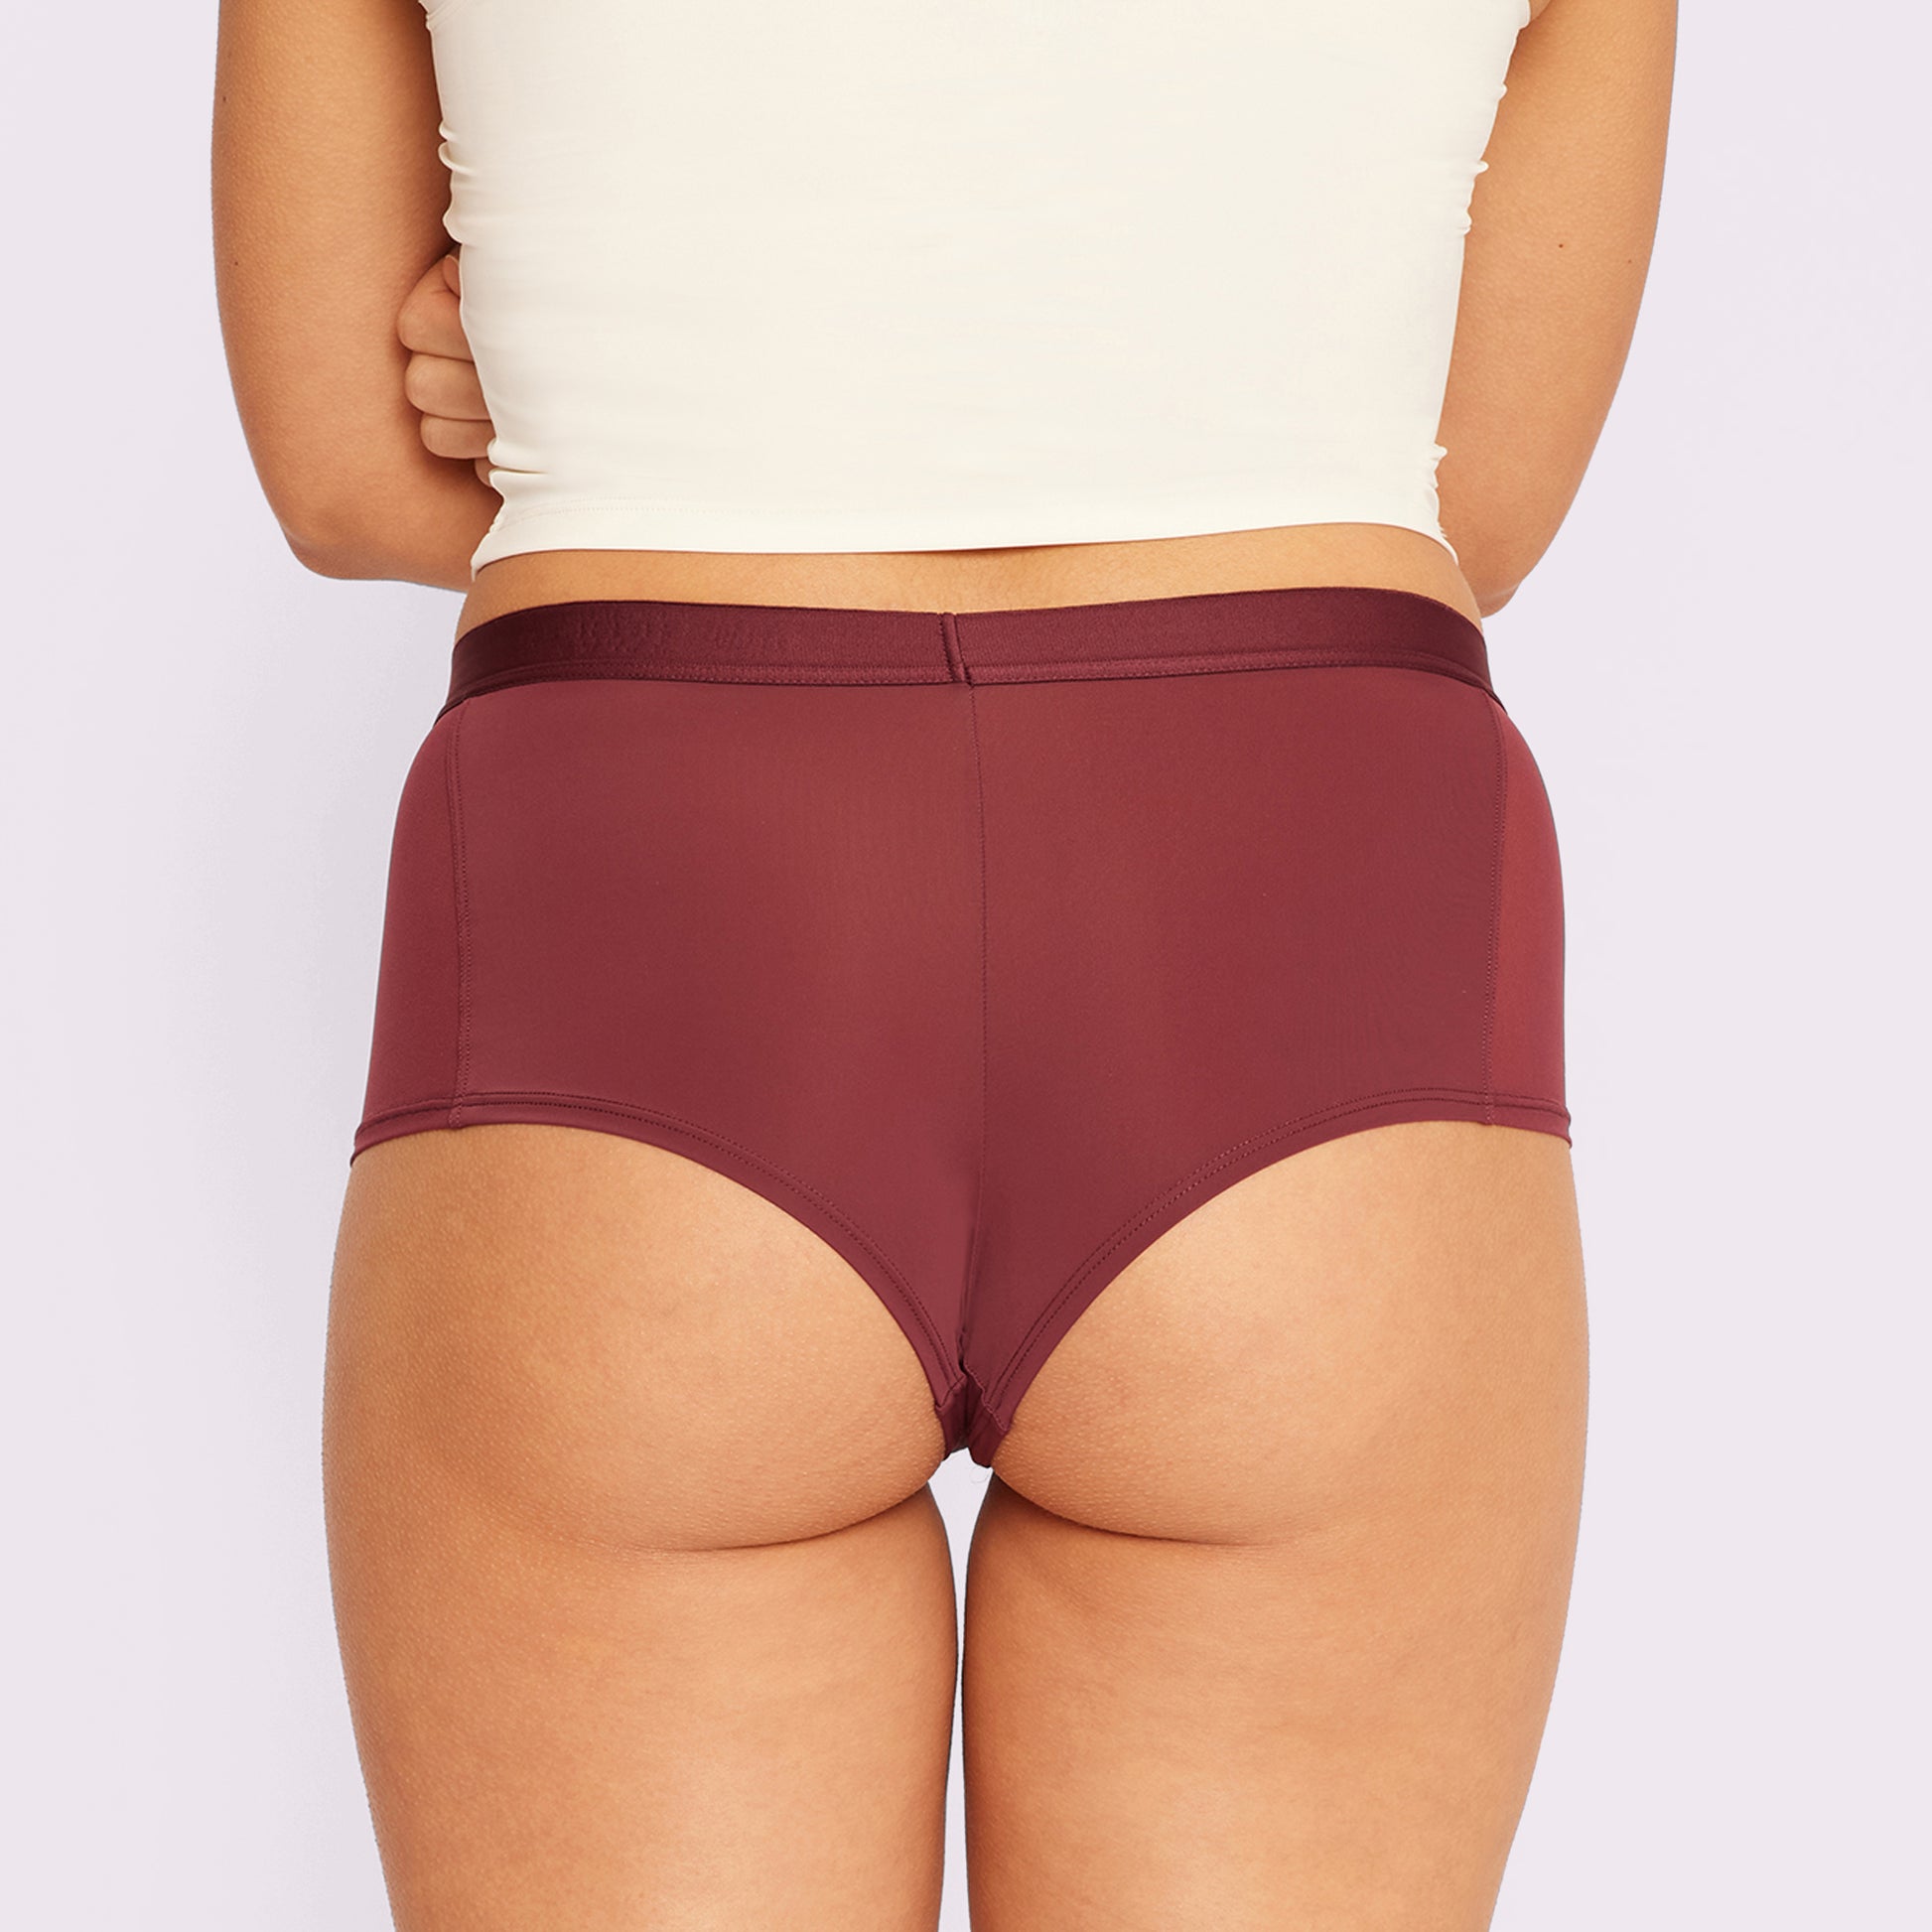 Boyshort | Women's Underwear | Starting at $9 | Parade